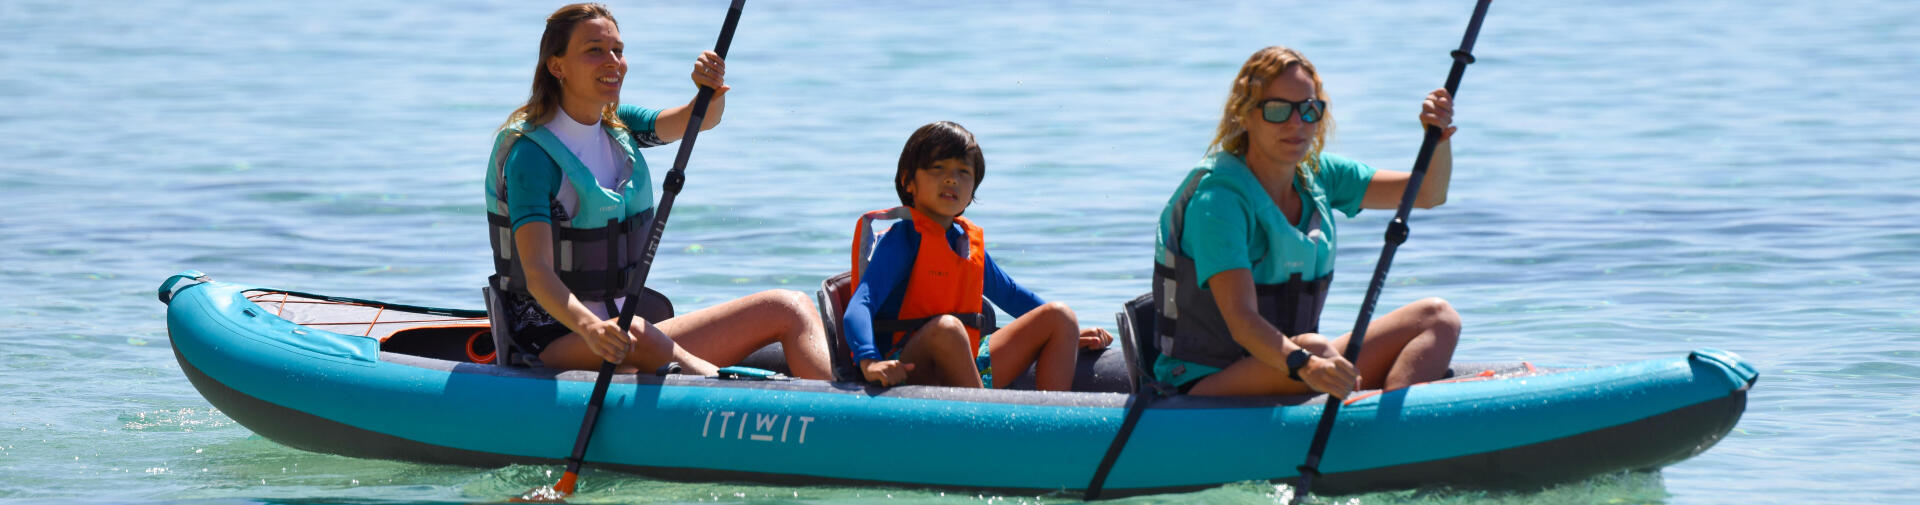 kayak familia pagaia colete insufláve